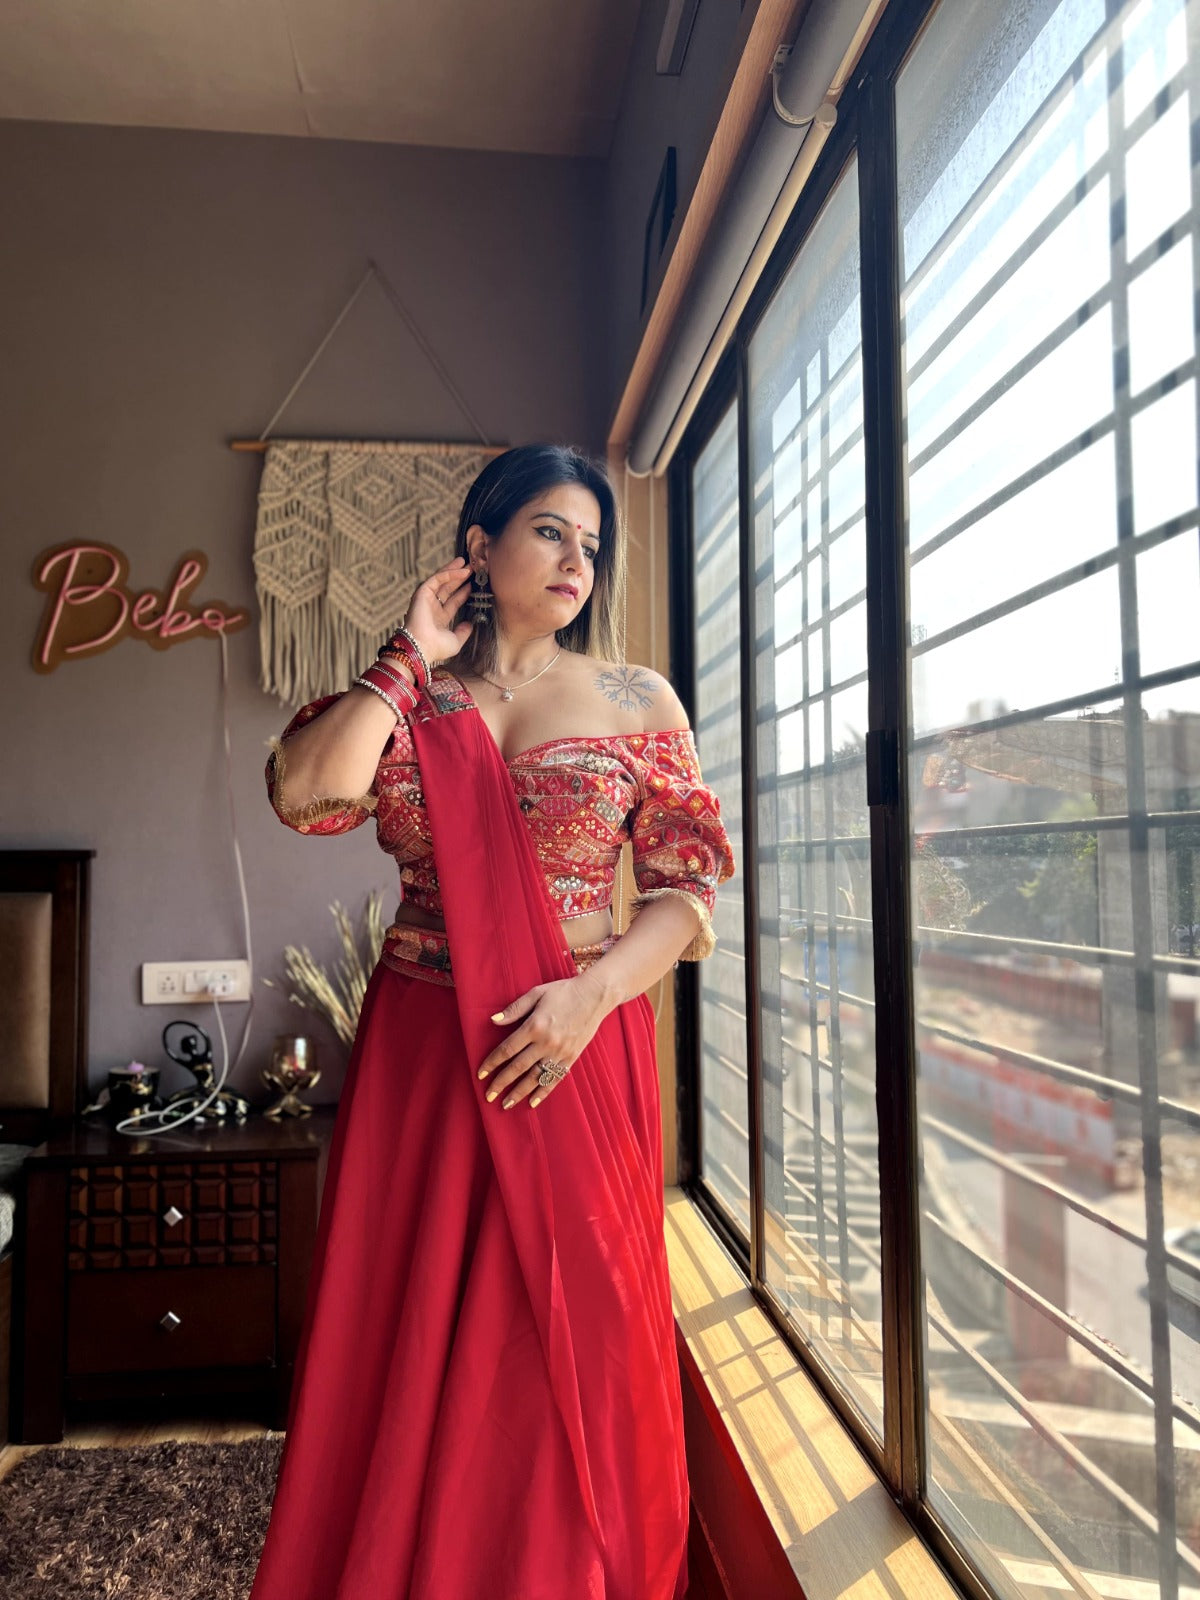 Stunning Beige Floral Designer Indo-Western Lehenga Choli for Wedding or  Engagement